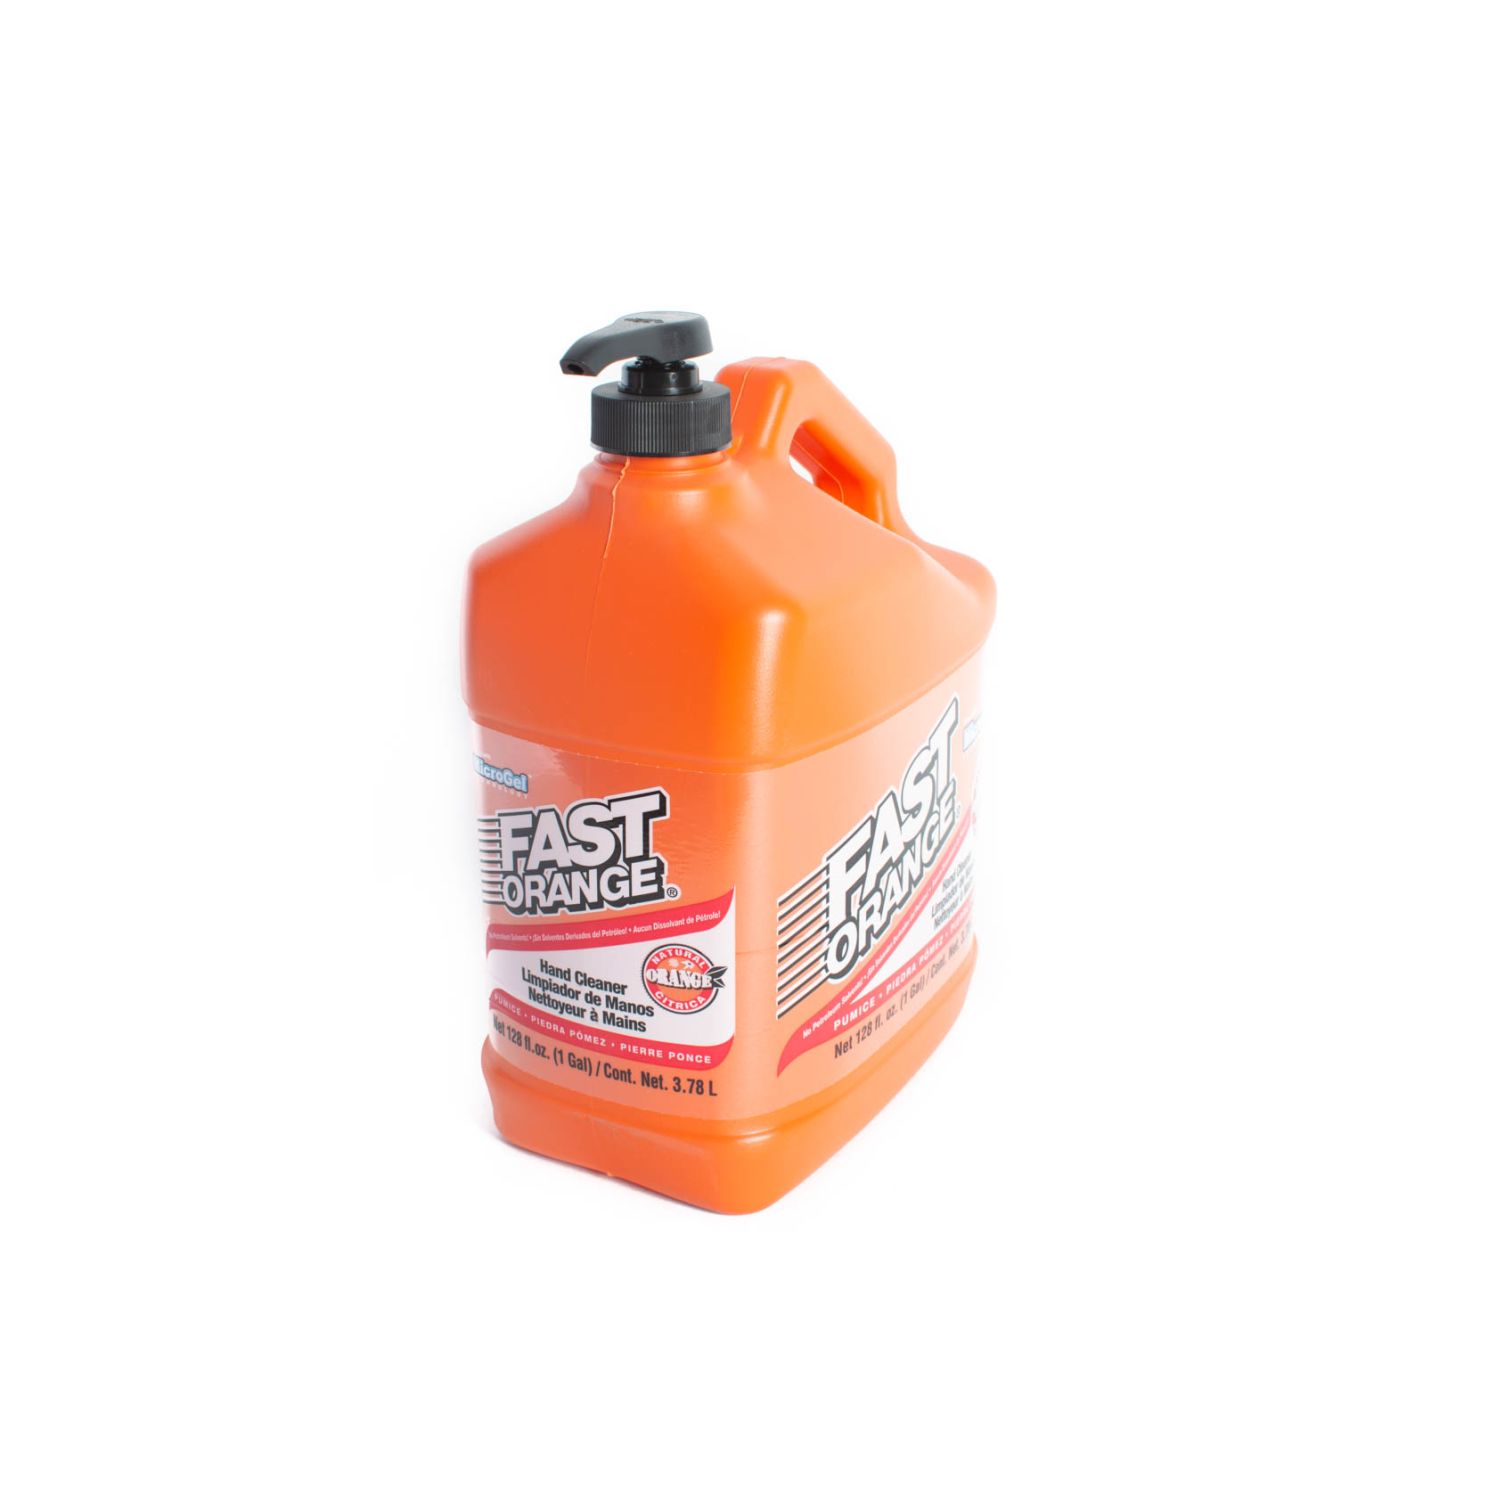 Permatex 1 gal. Fast Orange Pumice Lotion Hand Cleaner 25219